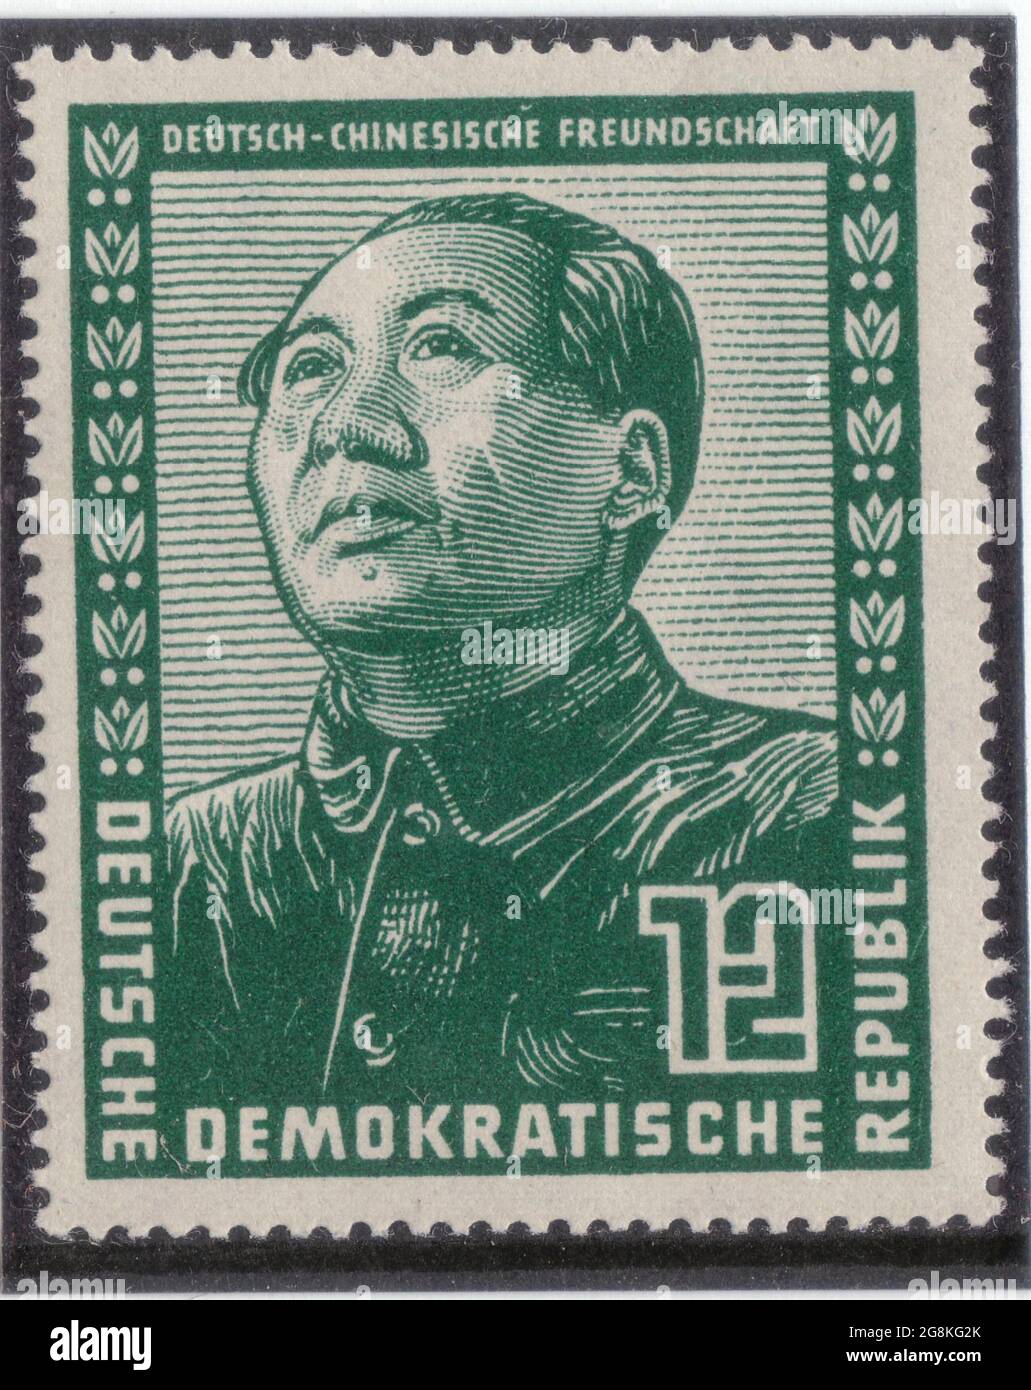 DDR [Deutsche Demokratische Republik (German Democratic Republic), official name of the former East Germany] Depicting Mao Zedong [Mao Tse-tung] 12pf Green Stock Photo